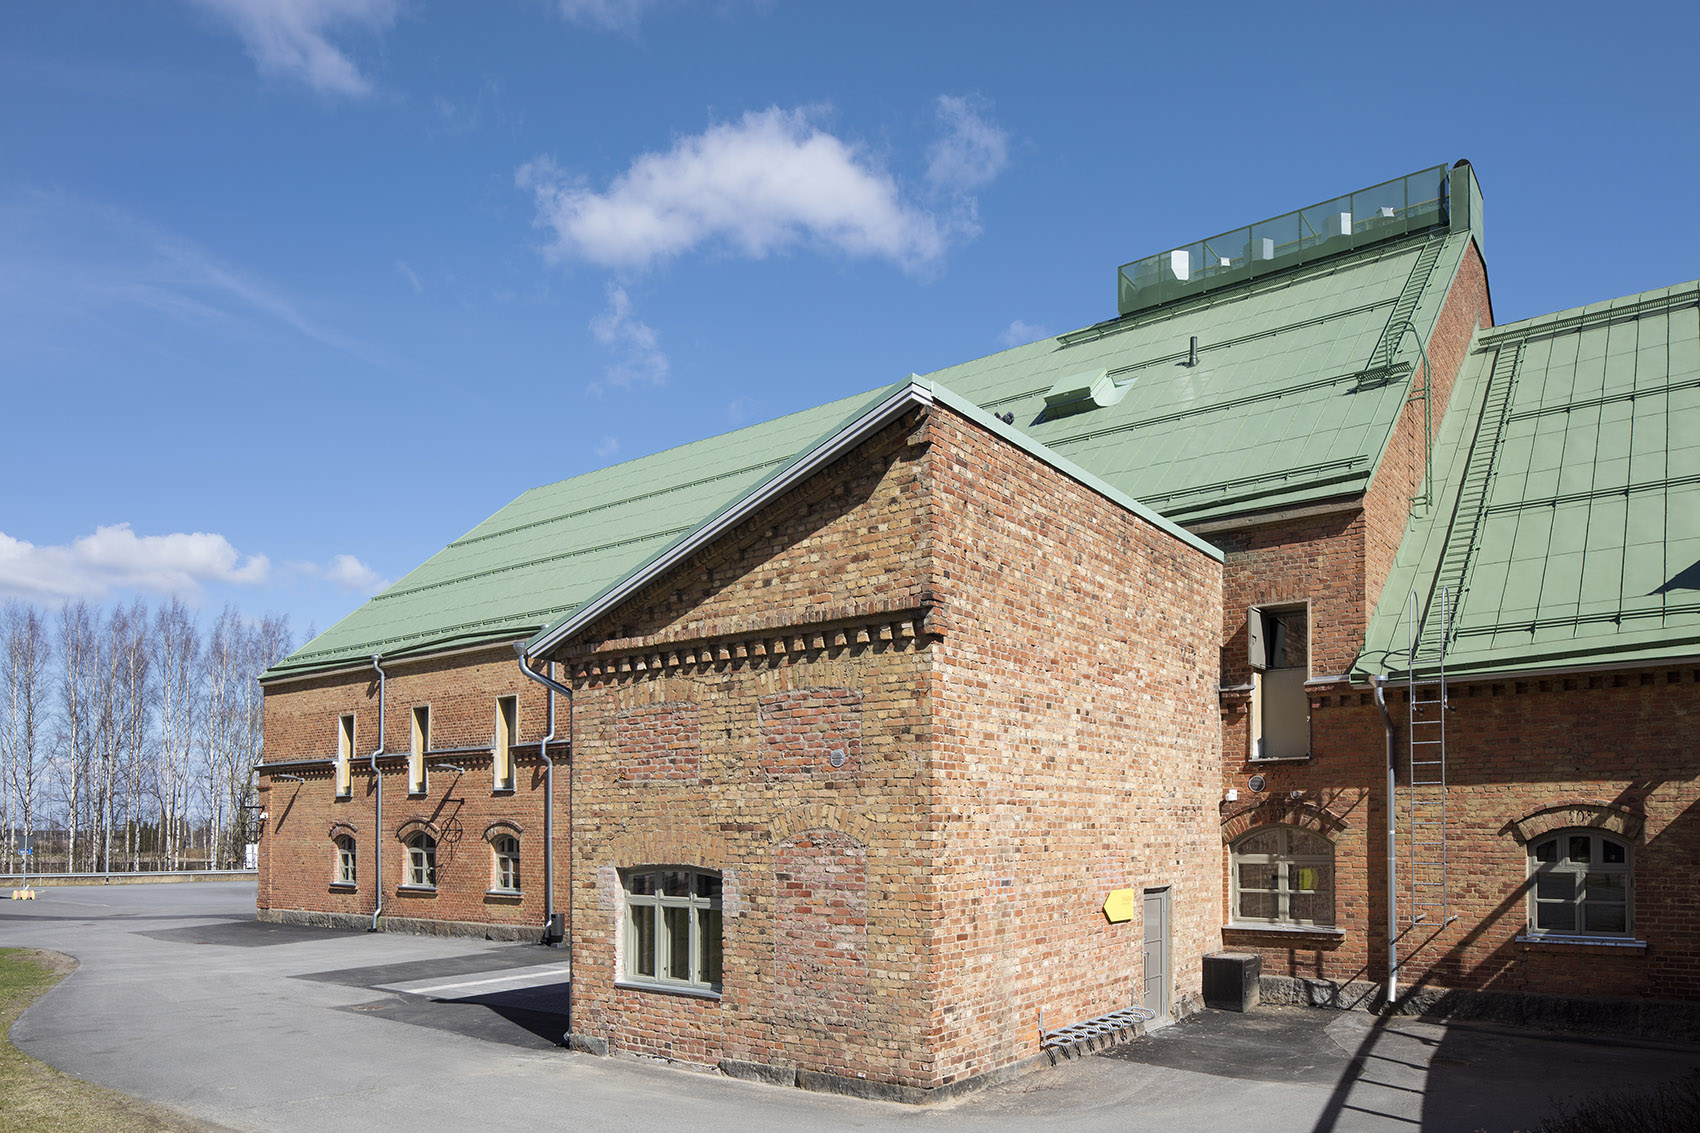 Kalevan Navetta文化艺术中心，芬兰/材料与结构的交响曲-59